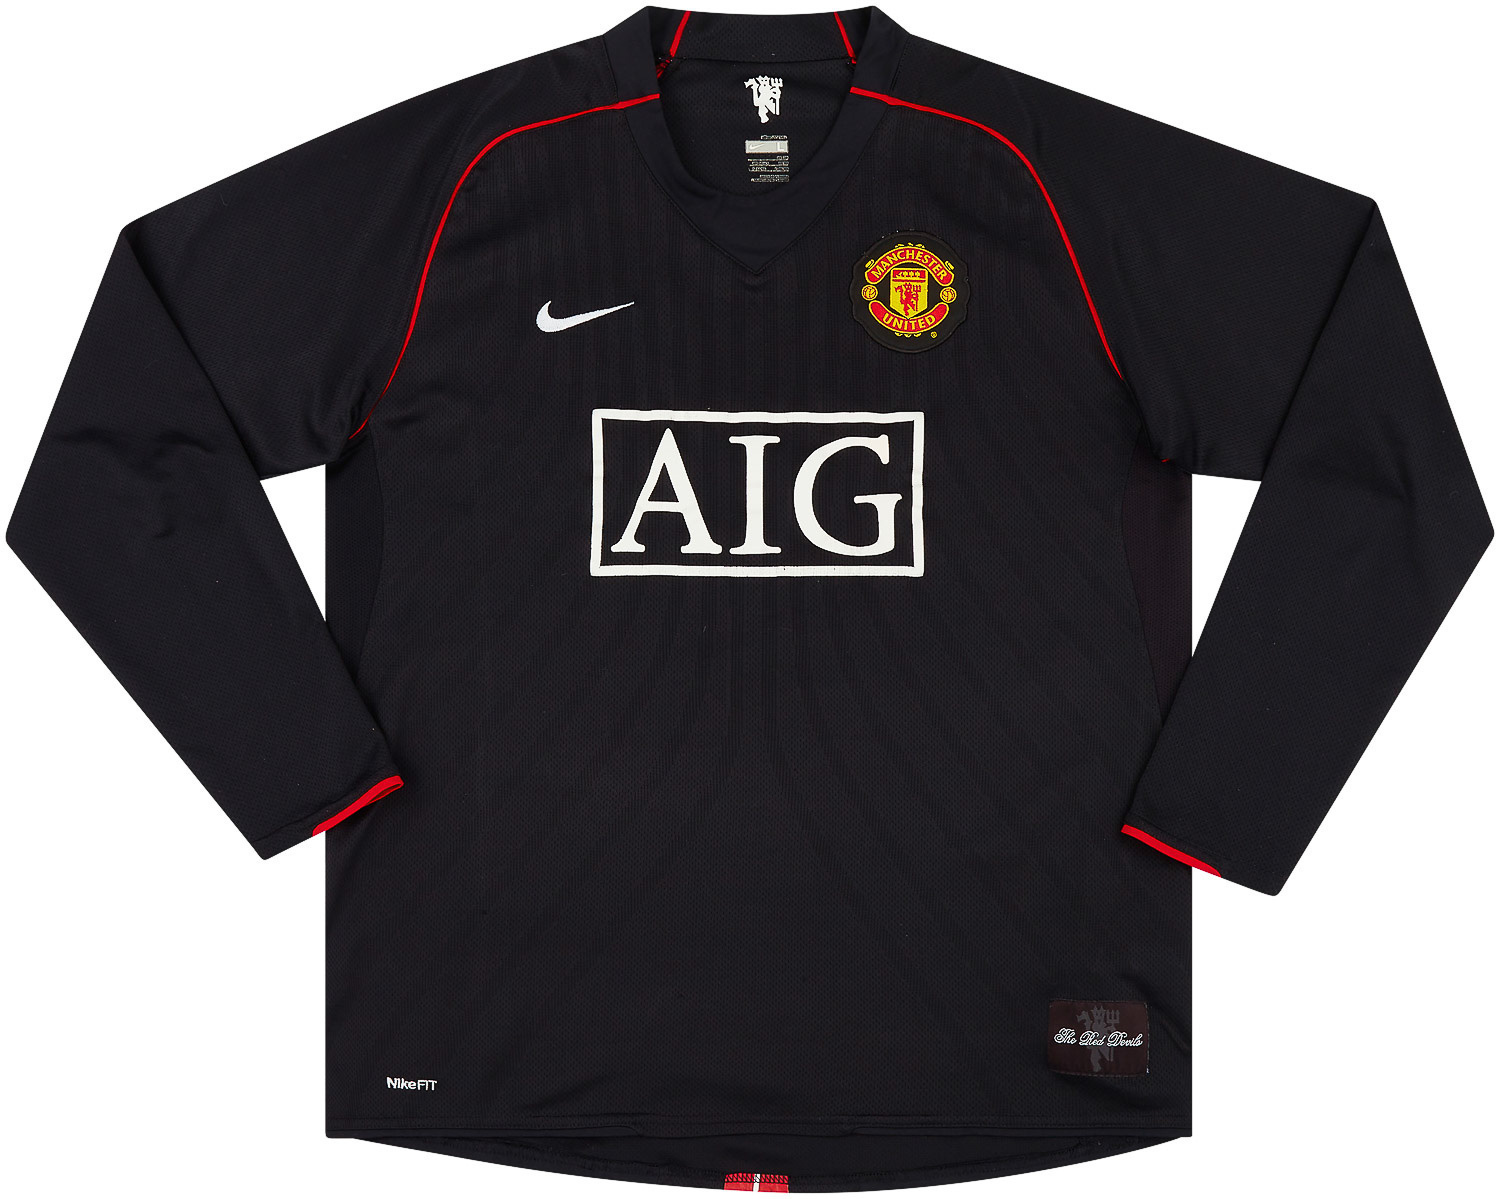 Retro Manchester United Shirt